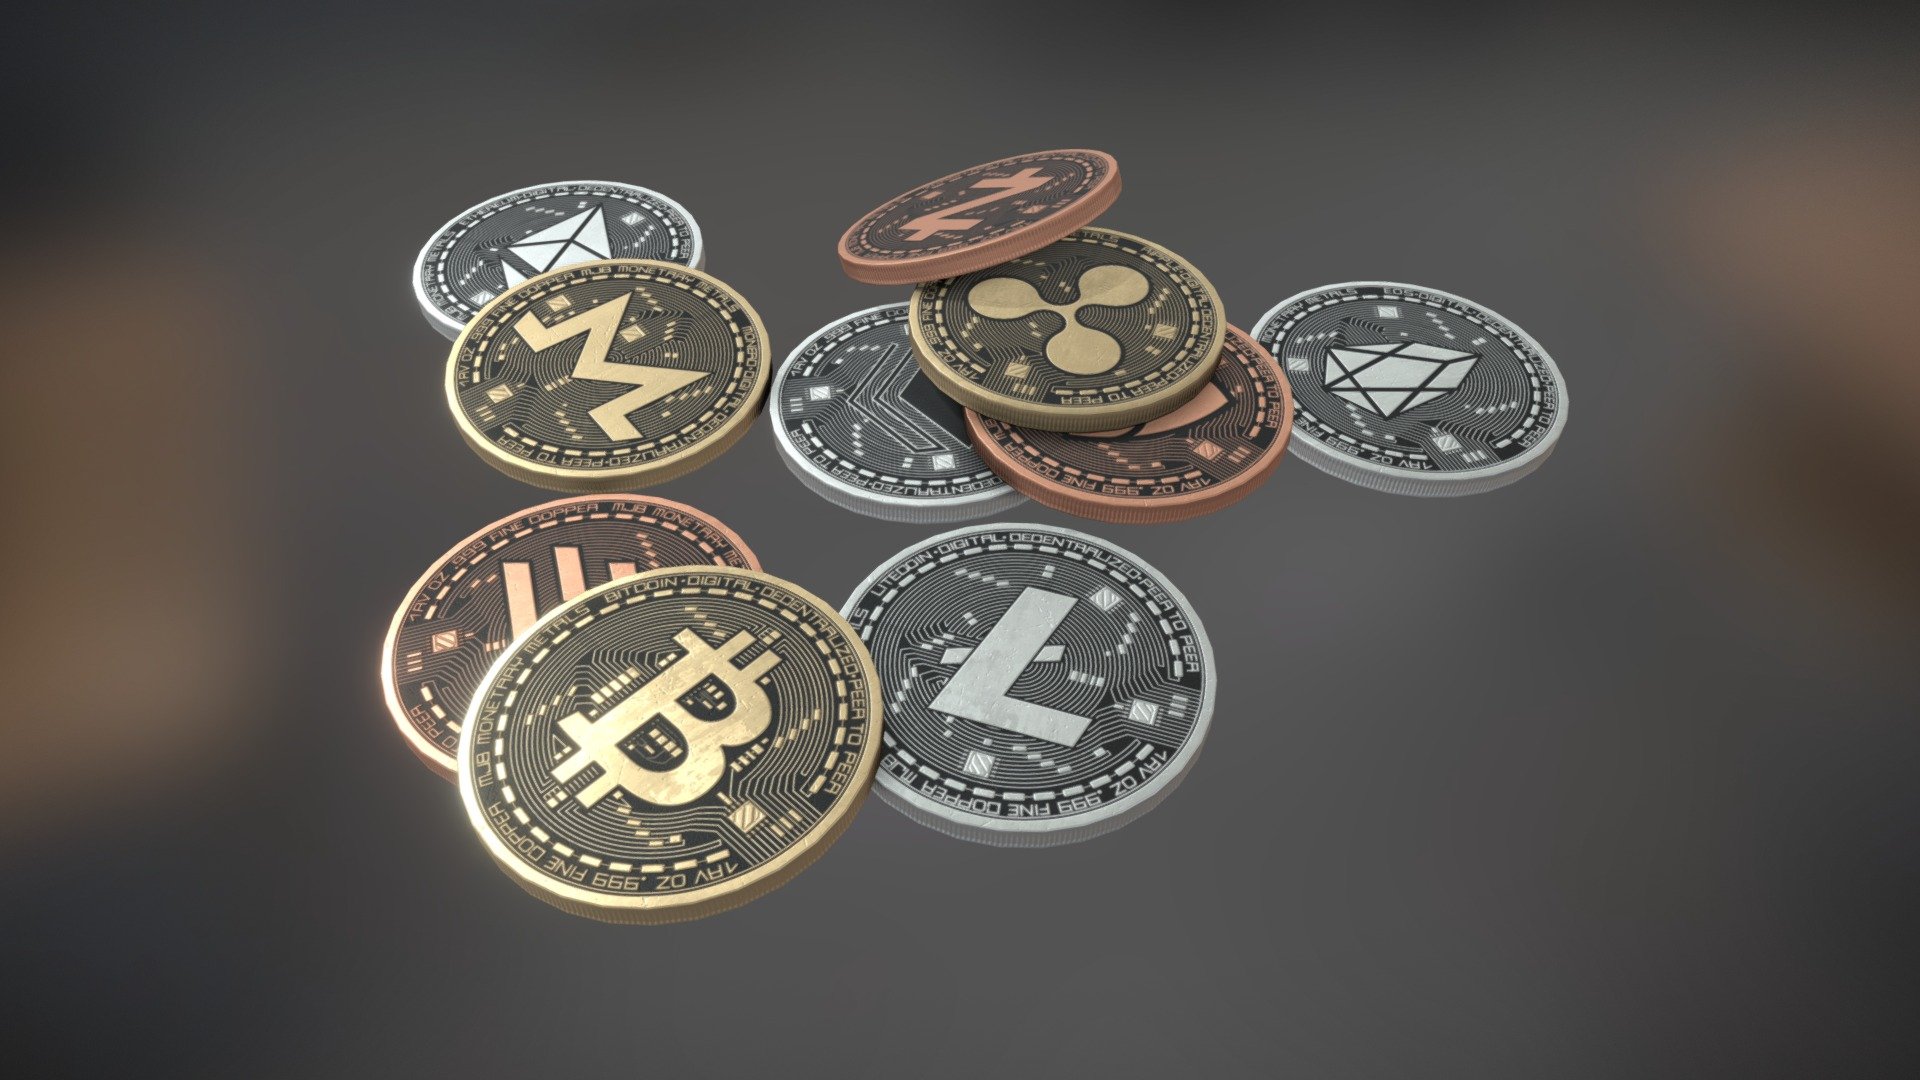 x11 crypto coins